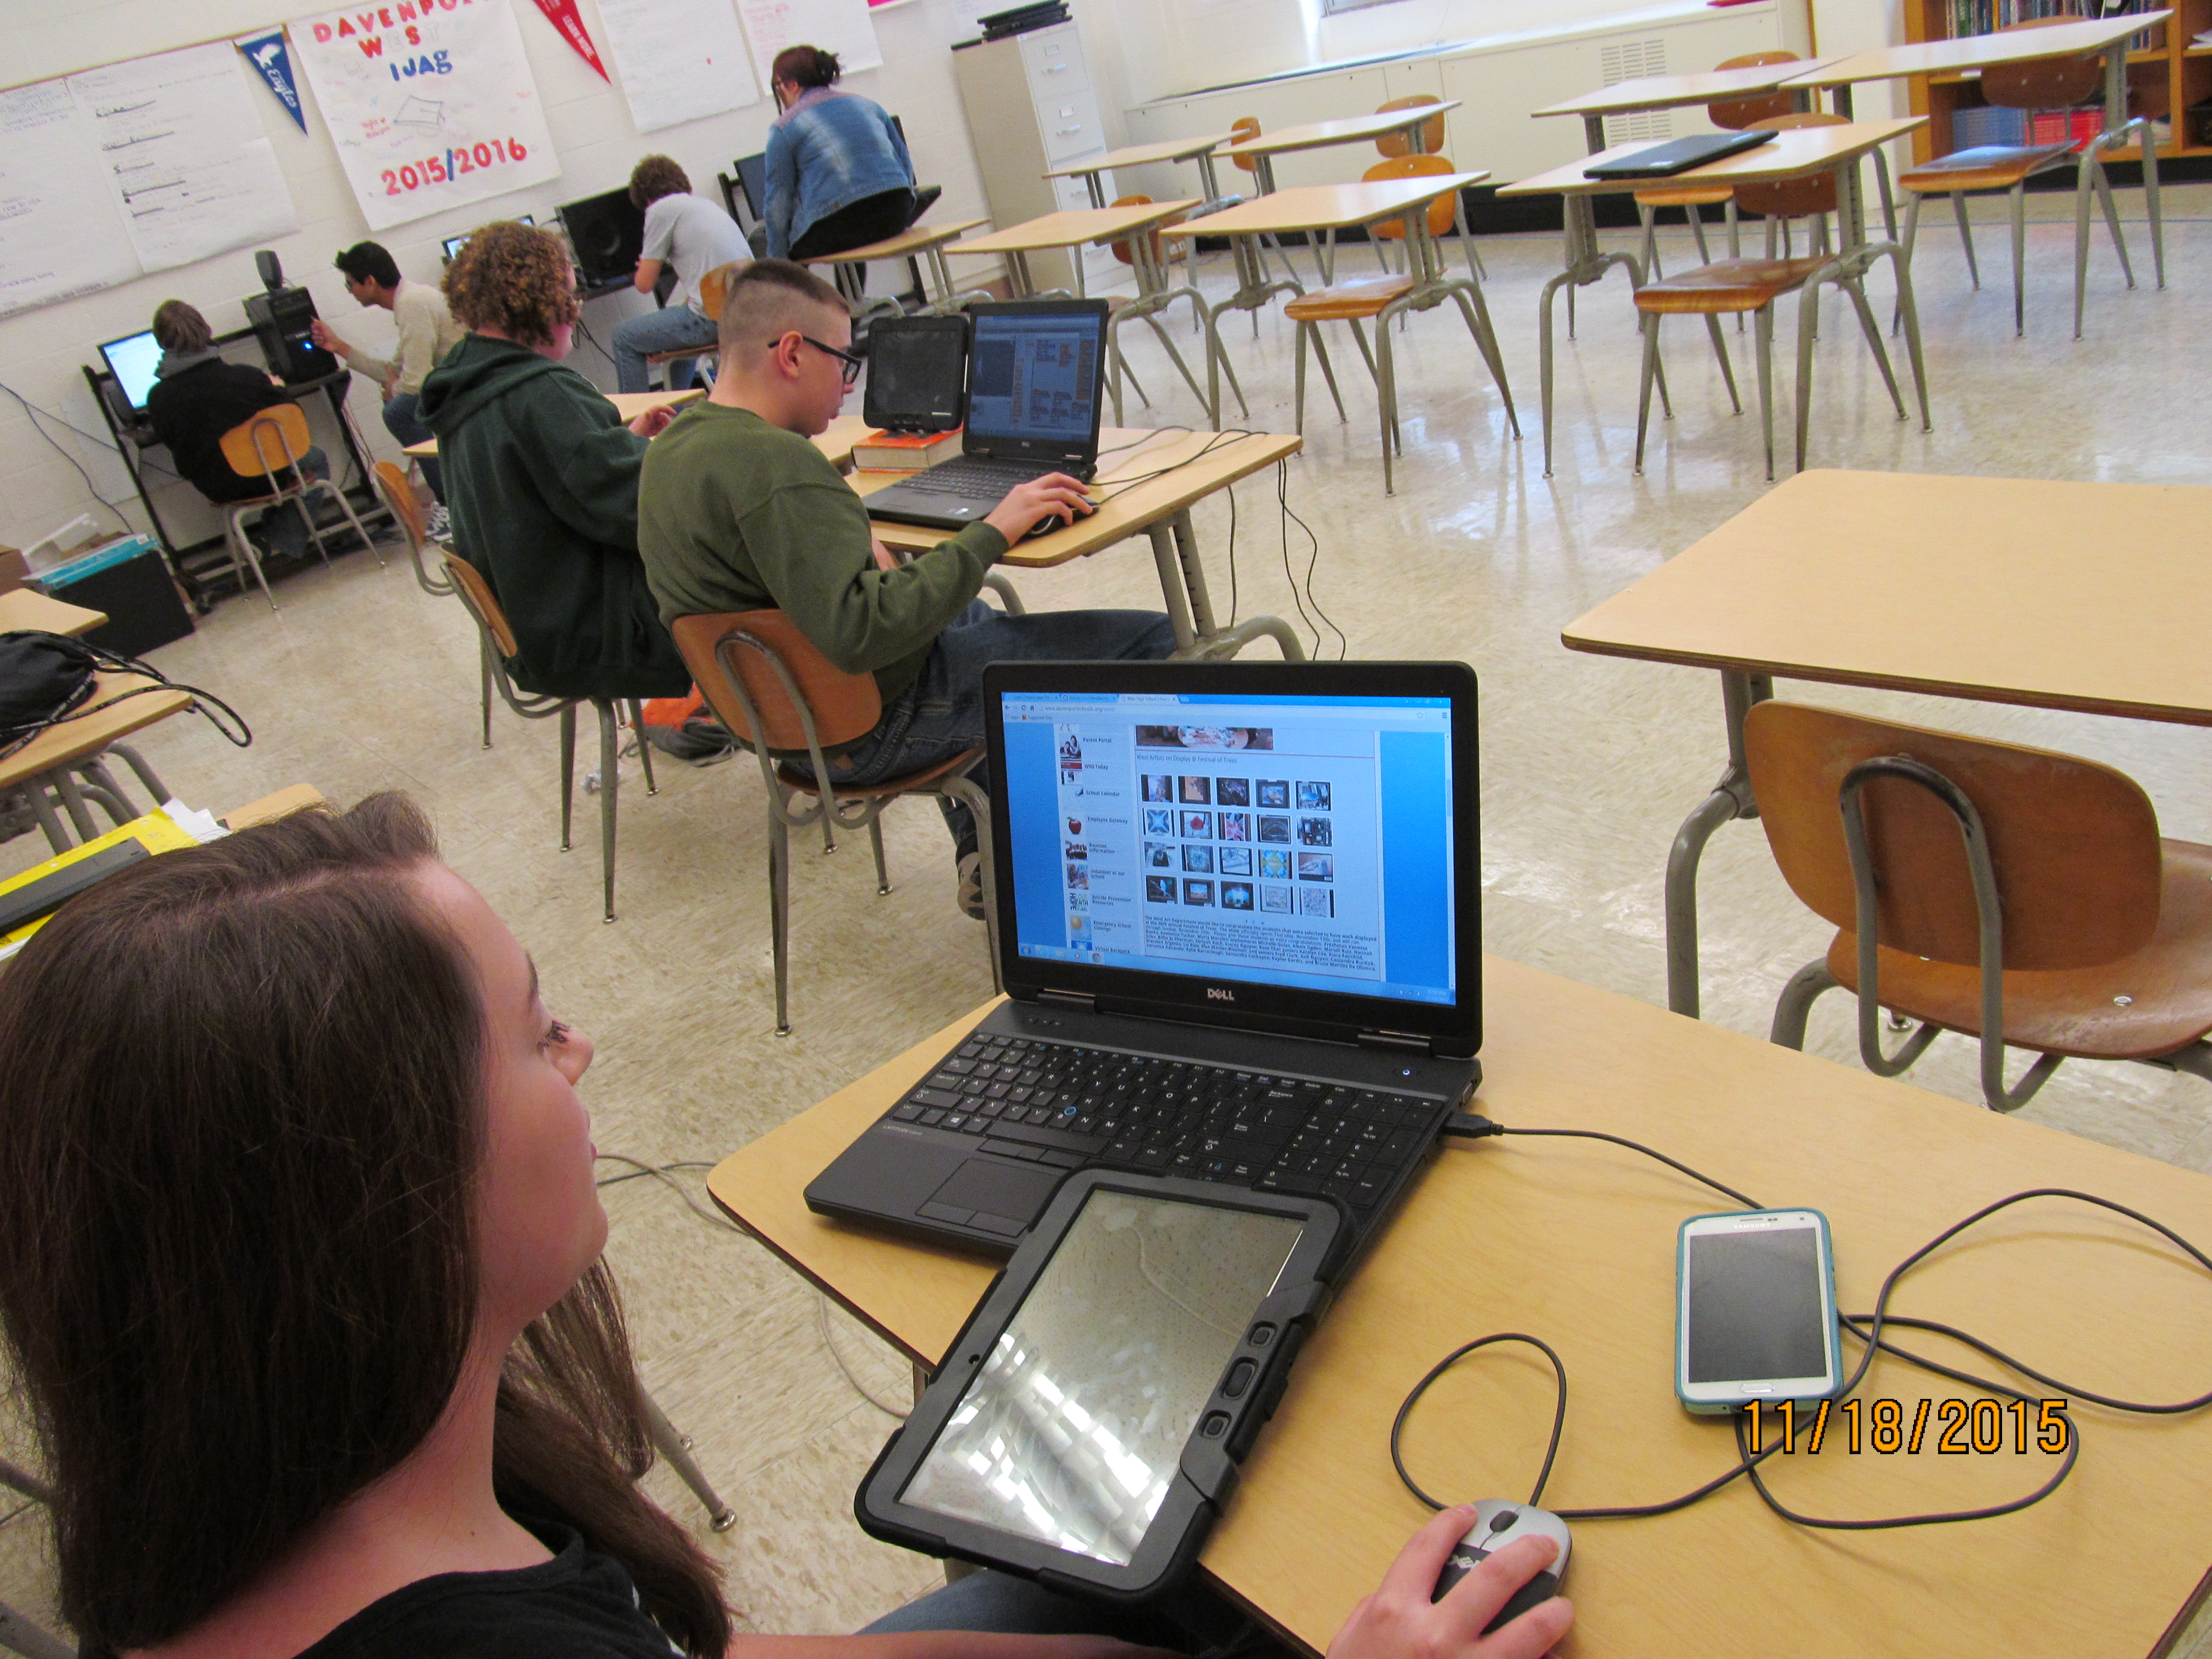 Davenport West High School utilizes Project Lead The Way's Computer Science program